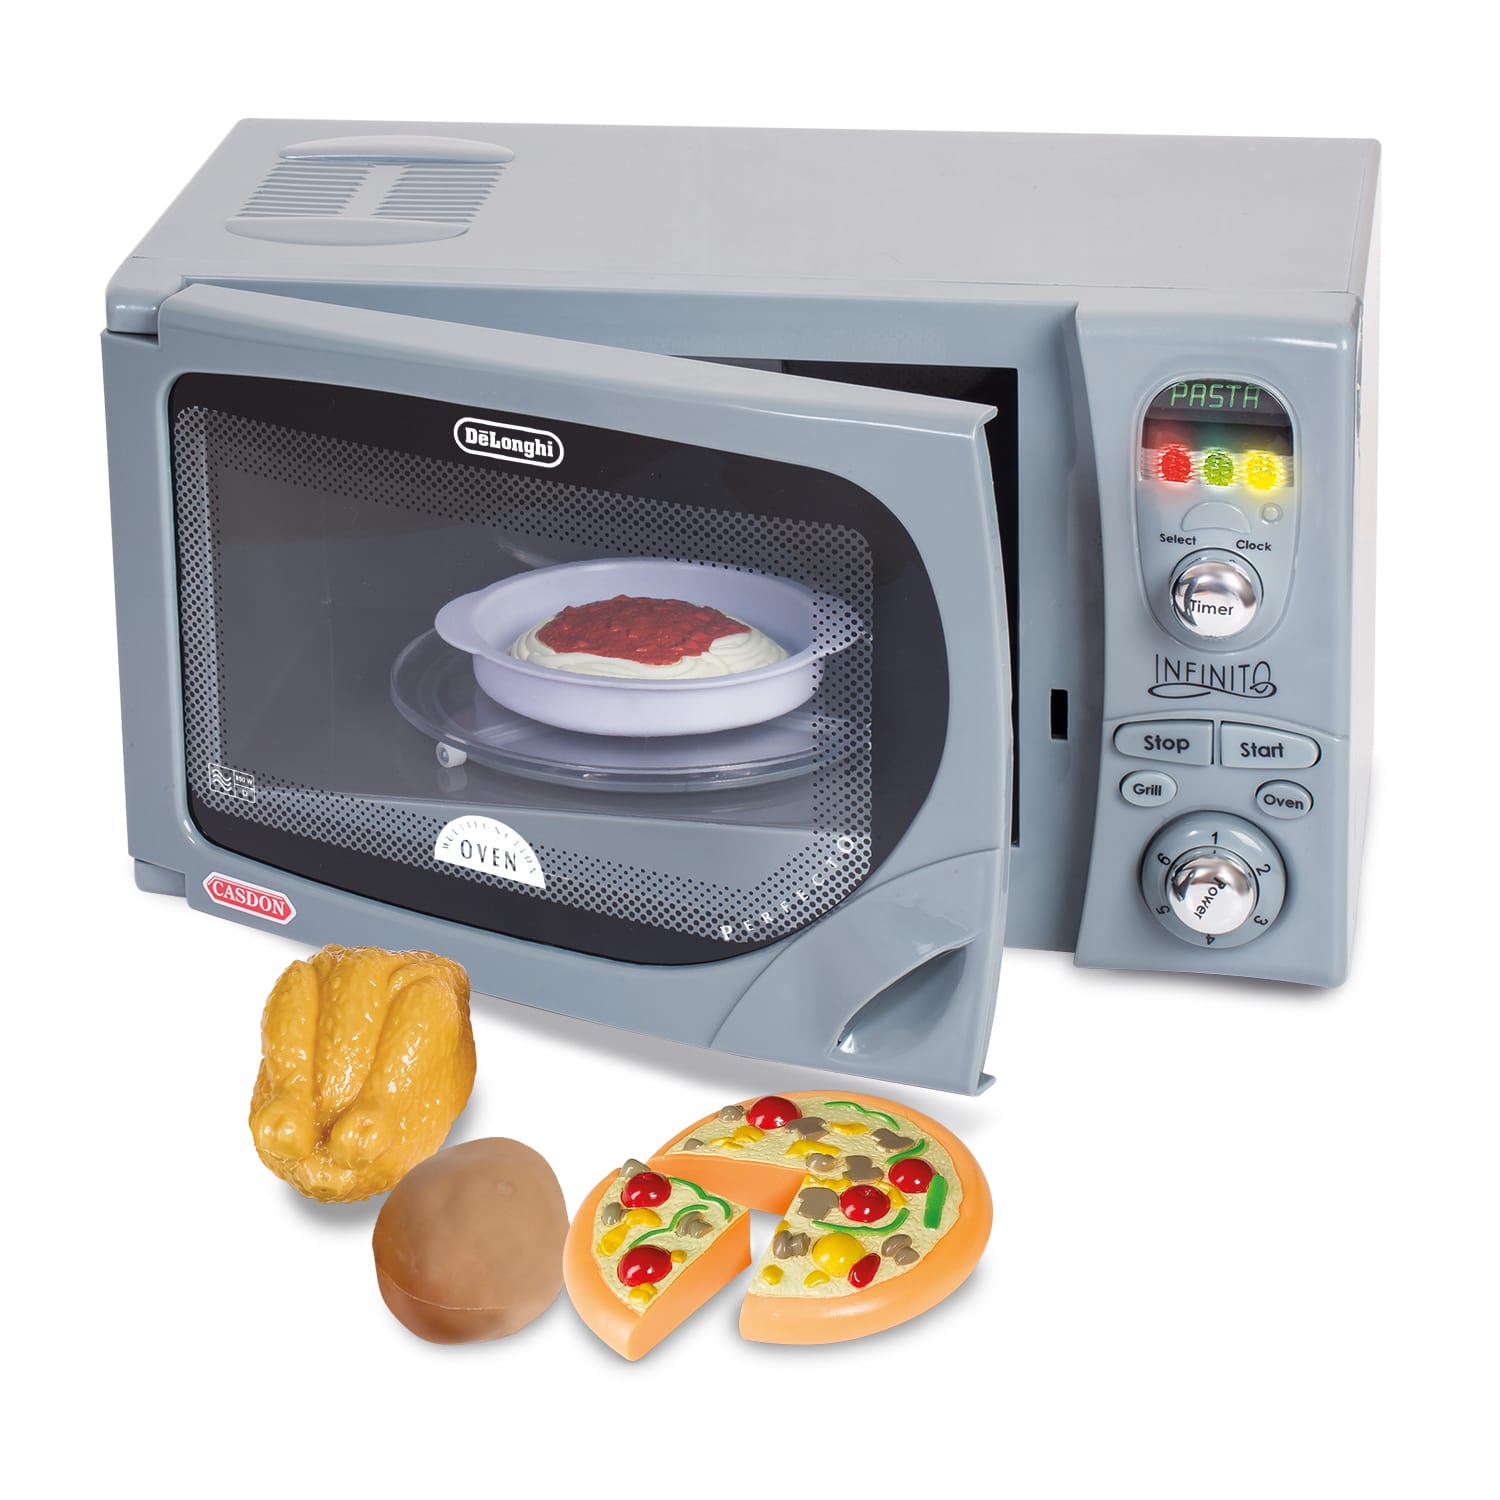  Casdon DeLonghi Microwave